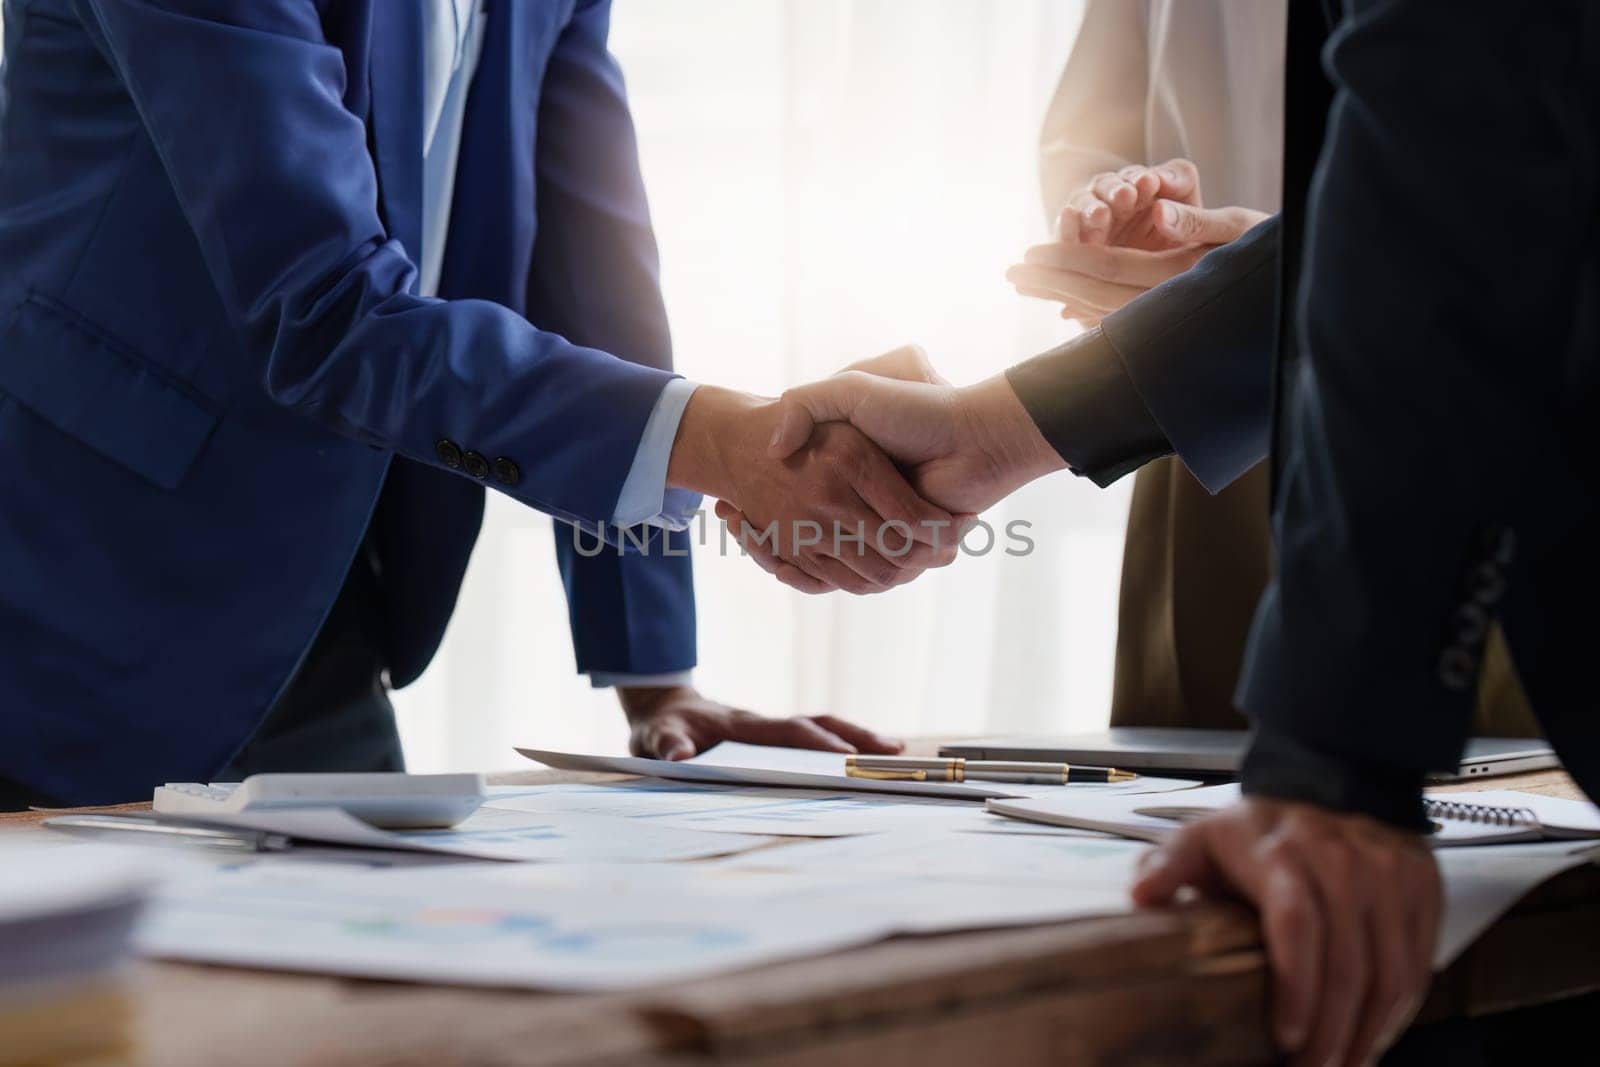 Business people handshake. Successful businessmen handshaking after good deal. Finishing up meeting concept.